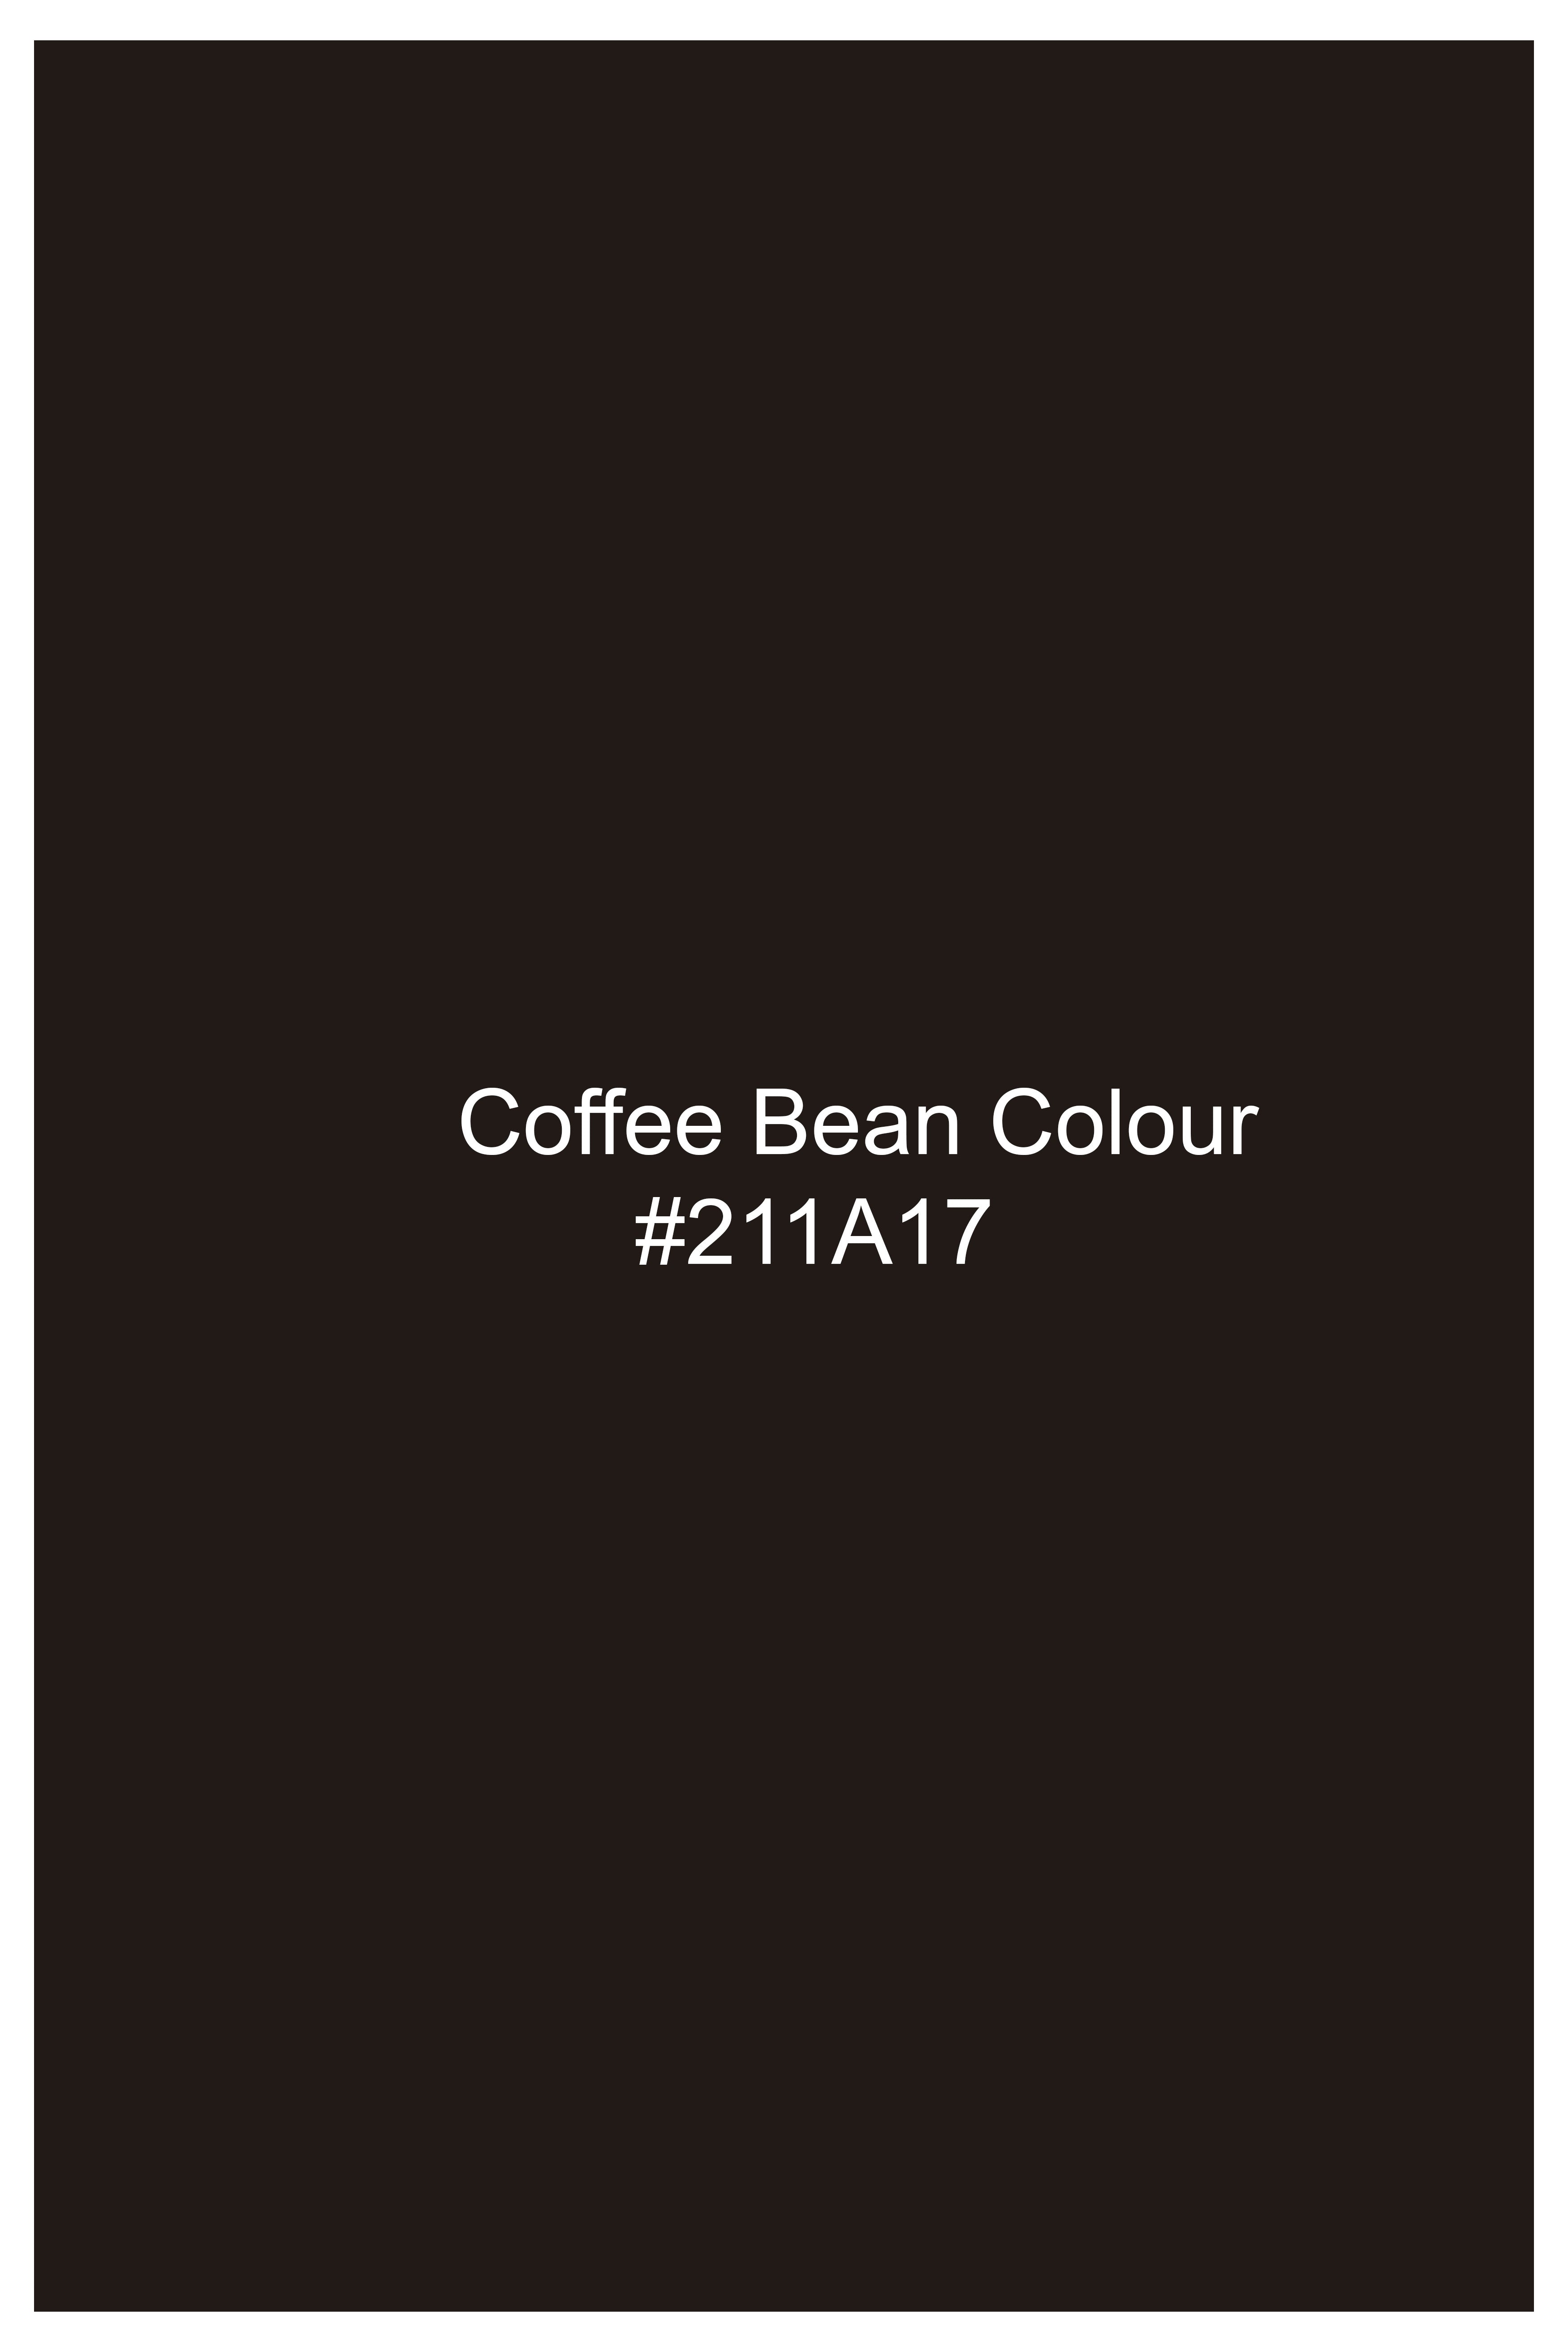 Coffee Bean Brown Tuxedo Designer Blazer BL2850-KWL-D113-36, BL2850-KWL-D113-38, BL2850-KWL-D113-40, BL2850-KWL-D113-42, BL2850-KWL-D113-44, BL2850-KWL-D113-46, BL2850-KWL-D113-48, BL2850-KWL-D113-50, BL2850-KWL-D113-52, BL2850-KWL-D113-54, BL2850-KWL-D113-56, BL2850-KWL-D113-58, BL2850-KWL-D113-60